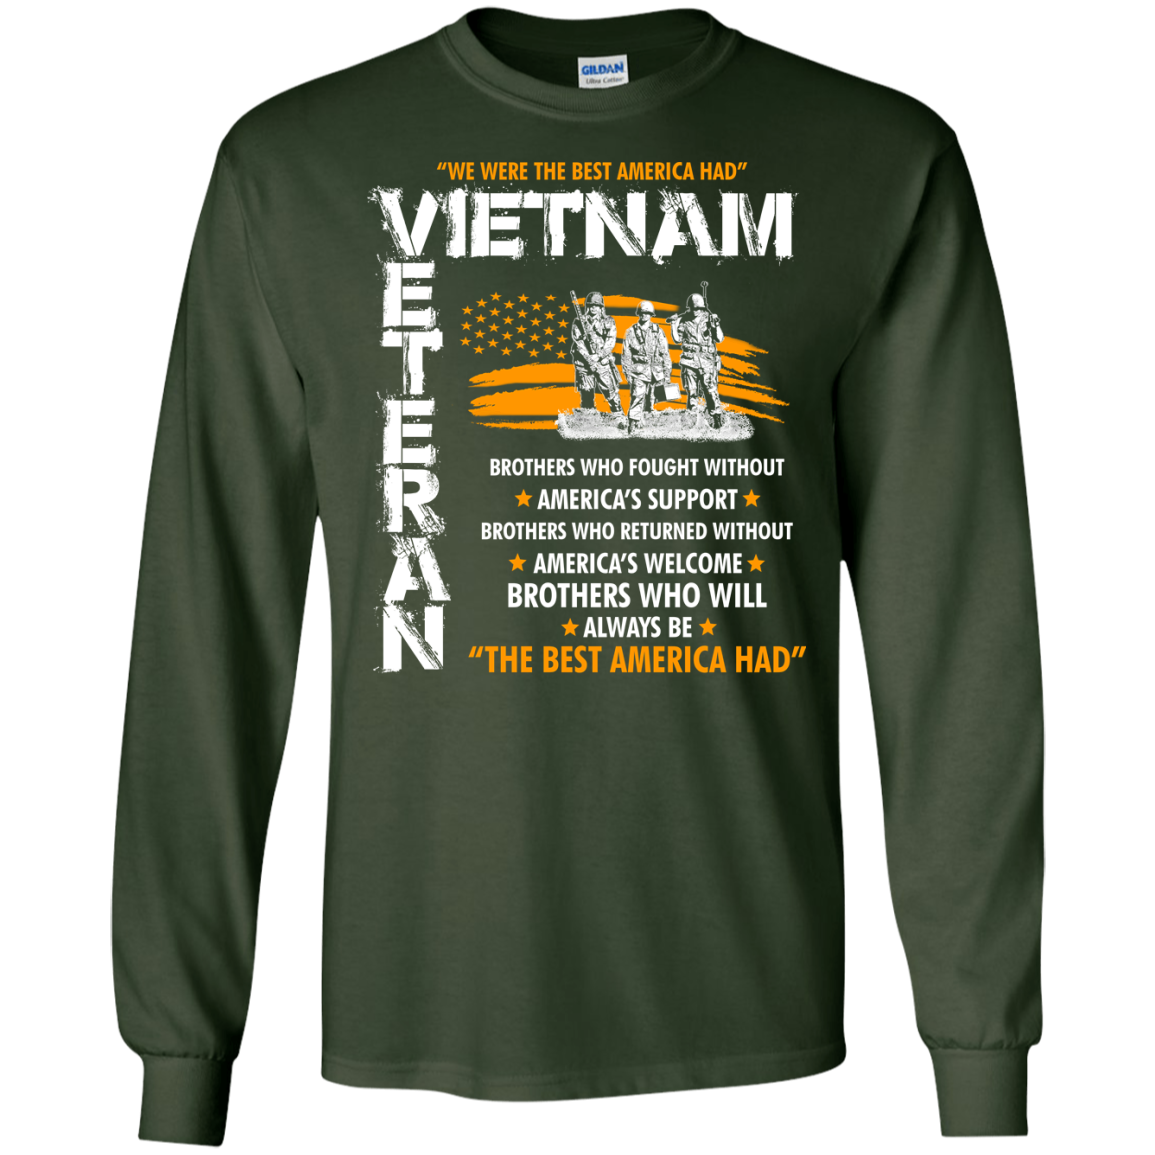 Viet Nam veteran: We were the best america had shirt, hoodie